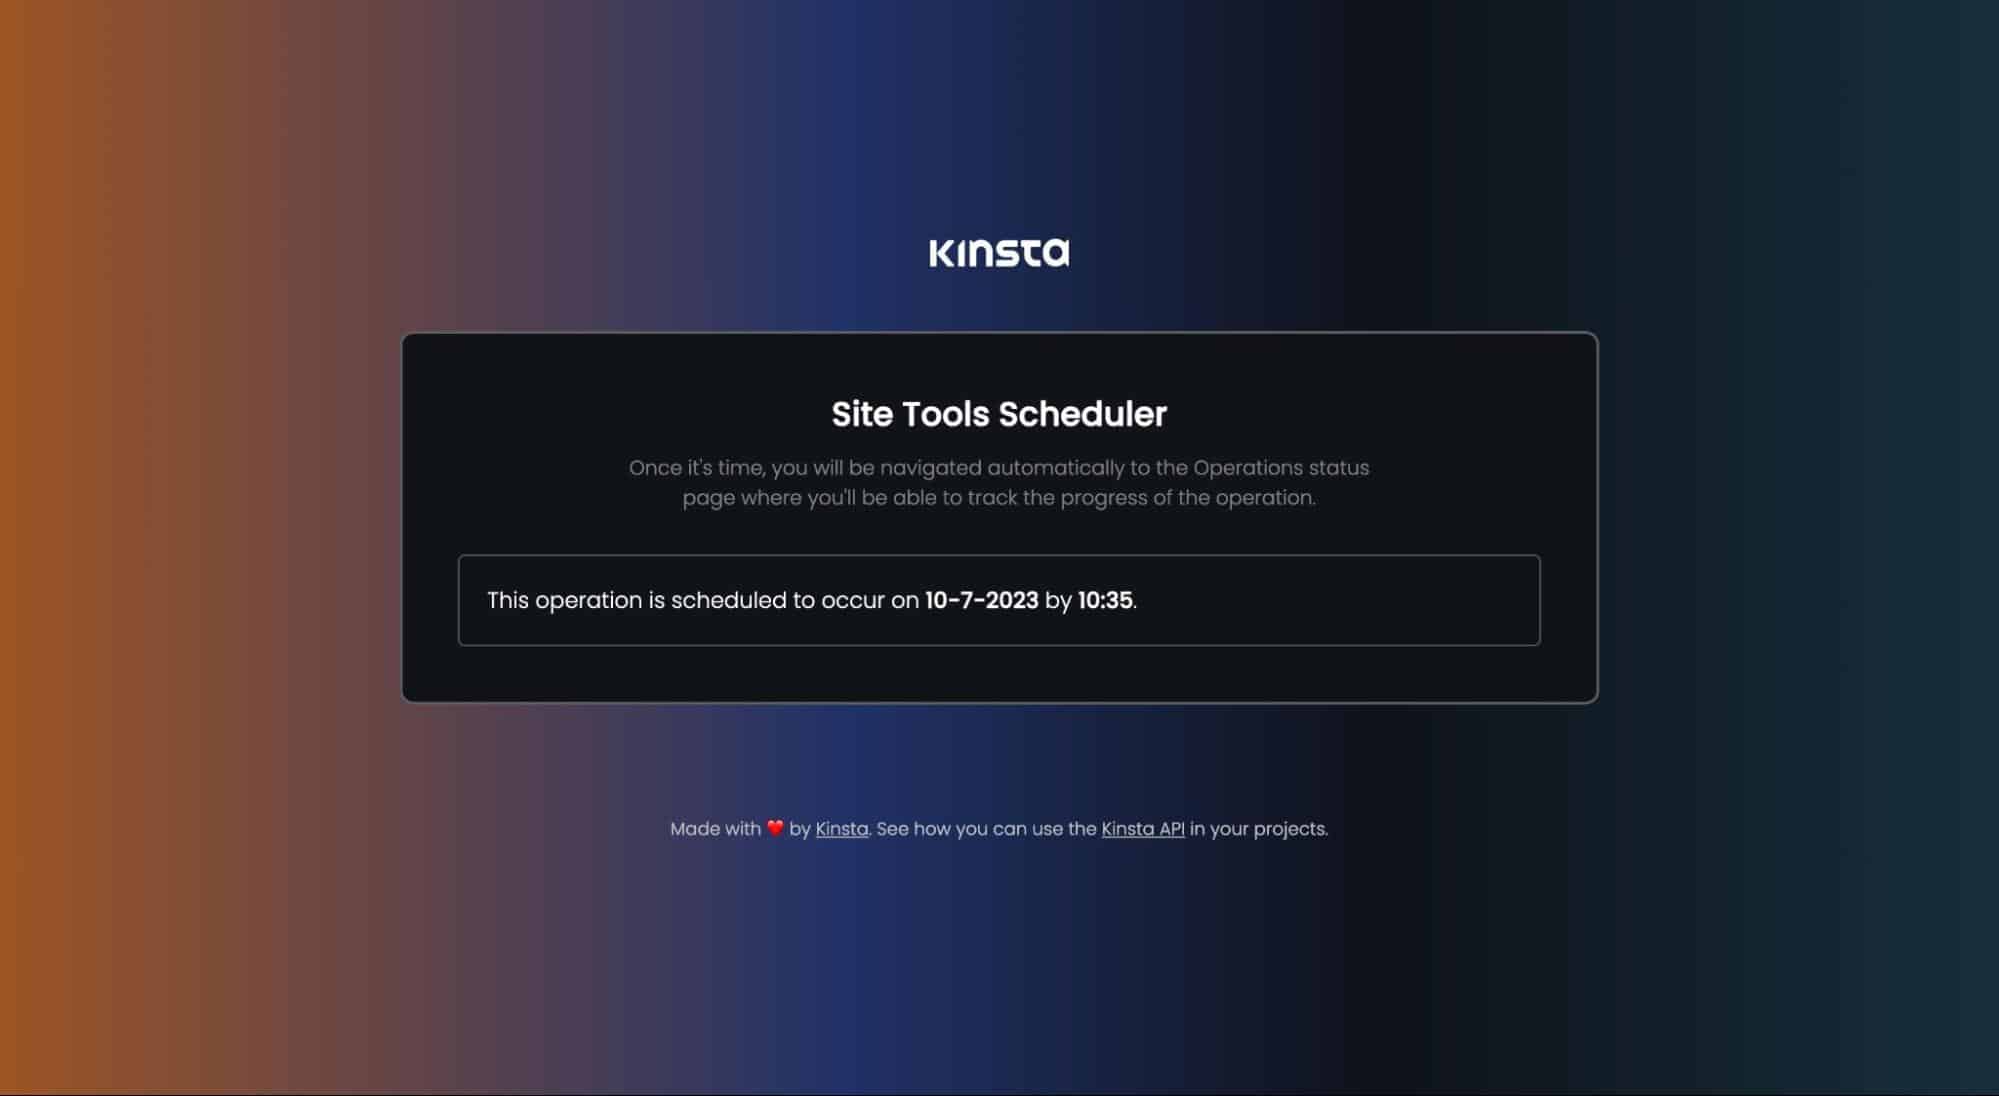 Kinsta site tools schedule information page